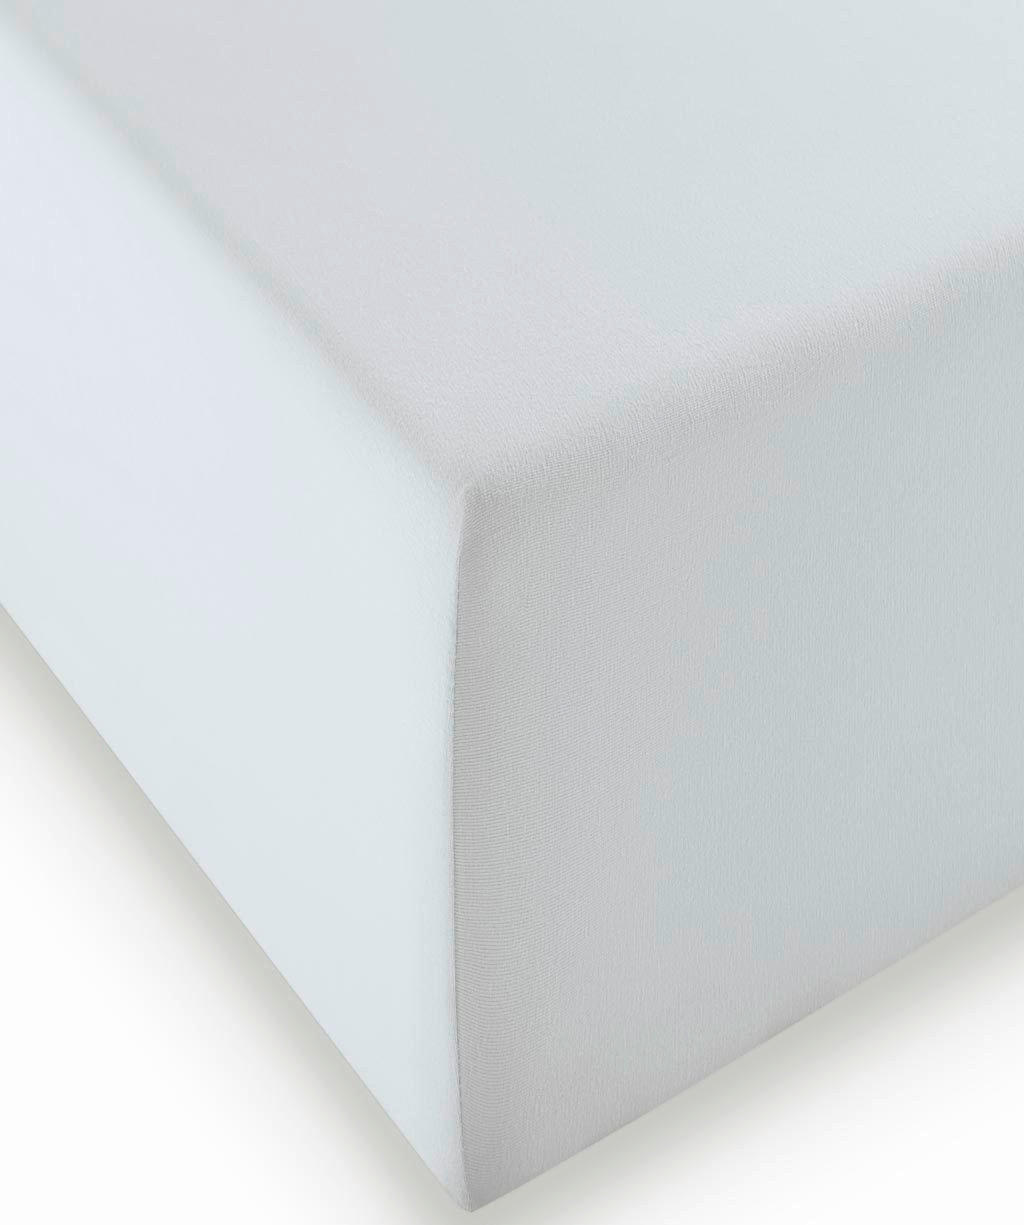 Levně Fleuresse ELASTICKÉ PROSTĚRADLO, barvy stříbra, 200/200 cm